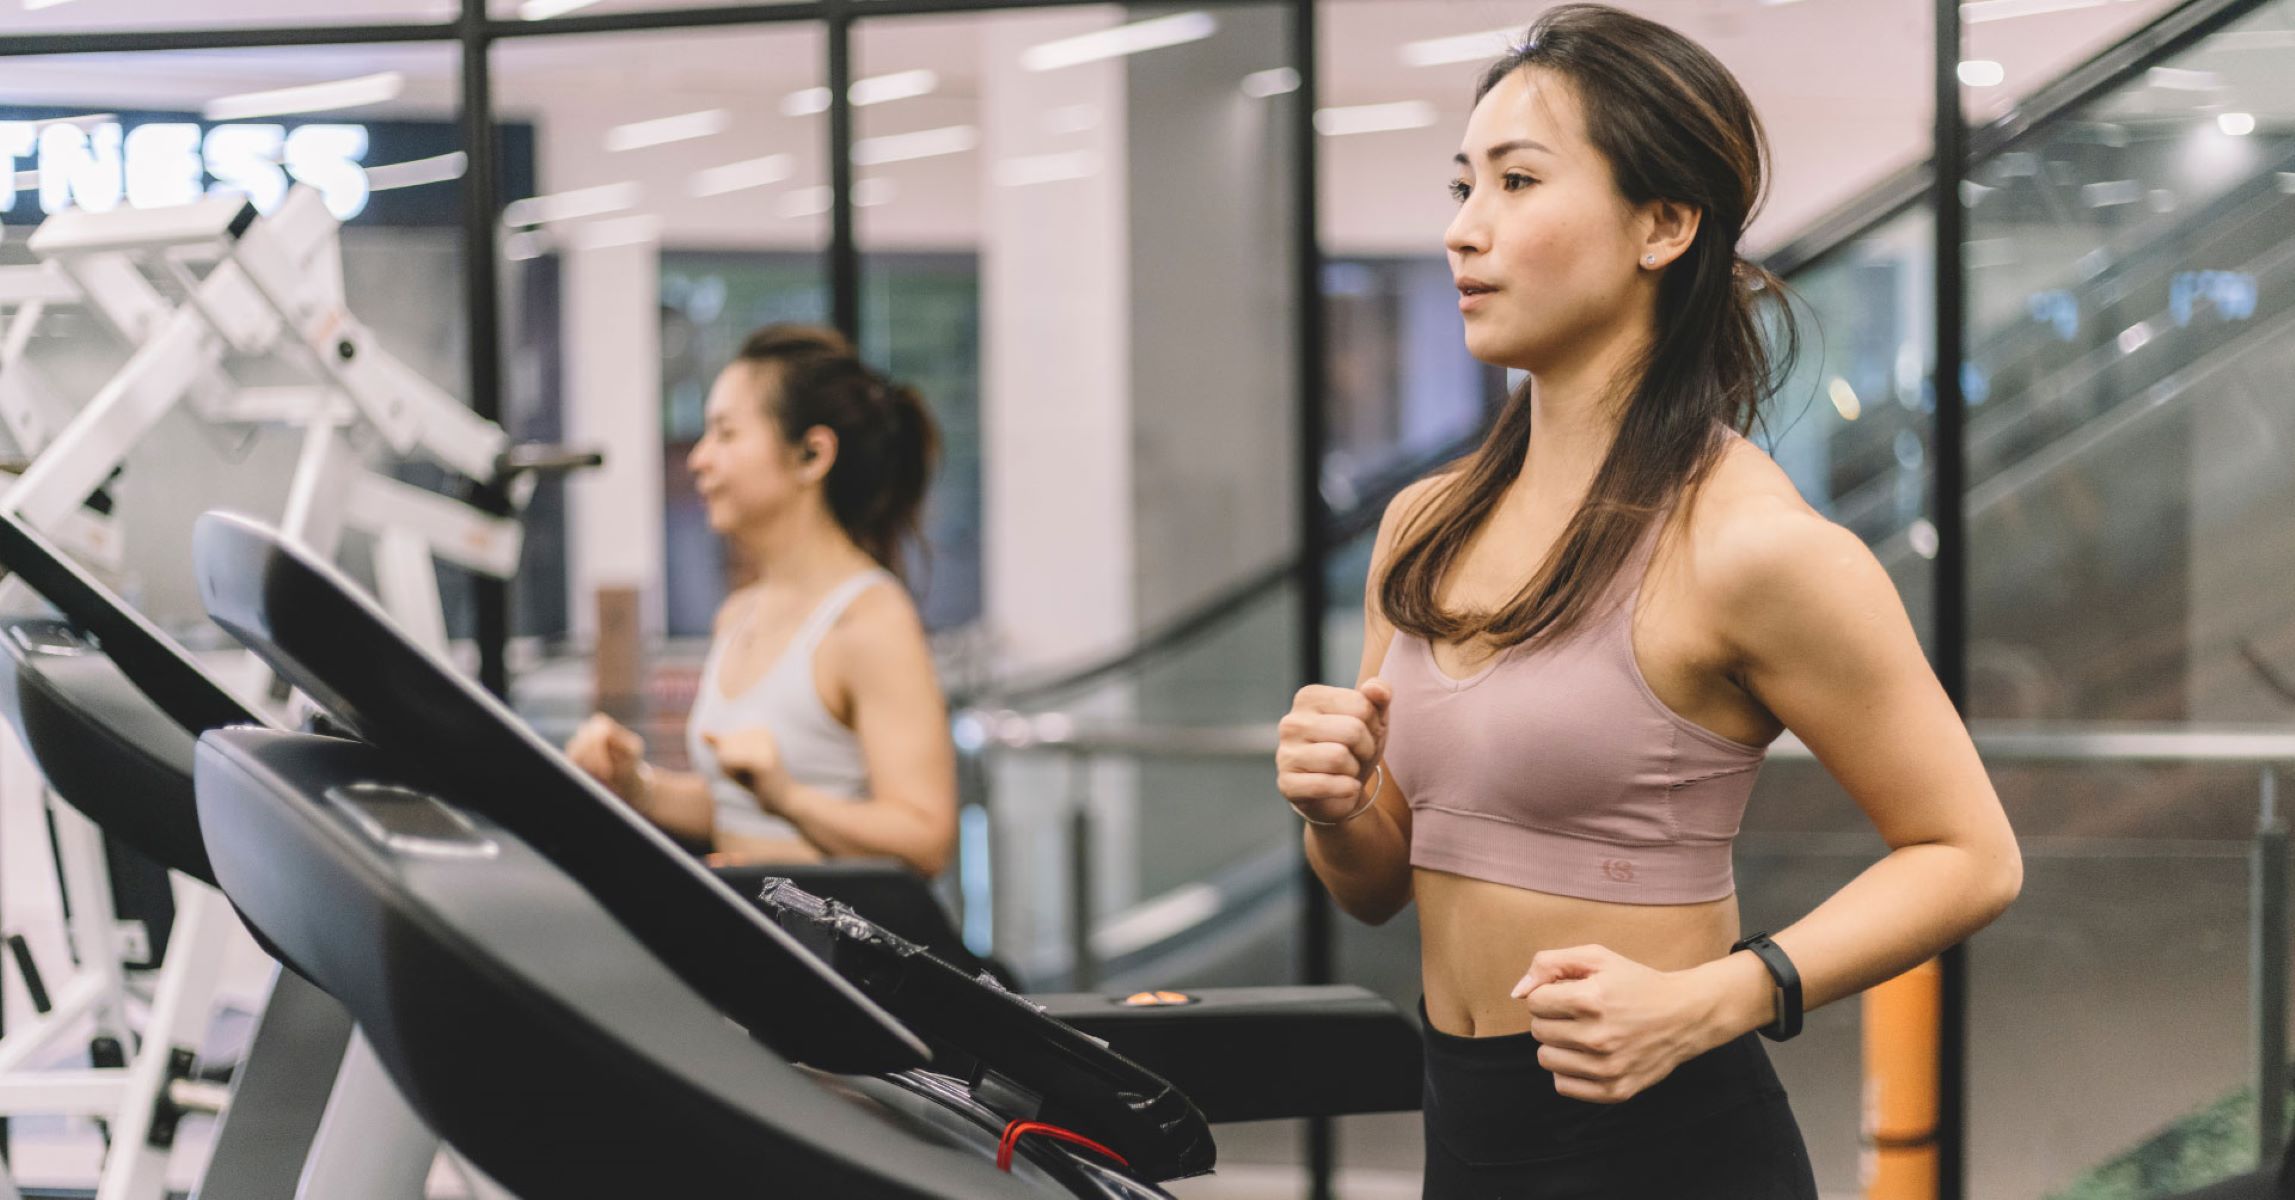 How To Train On Treadmill